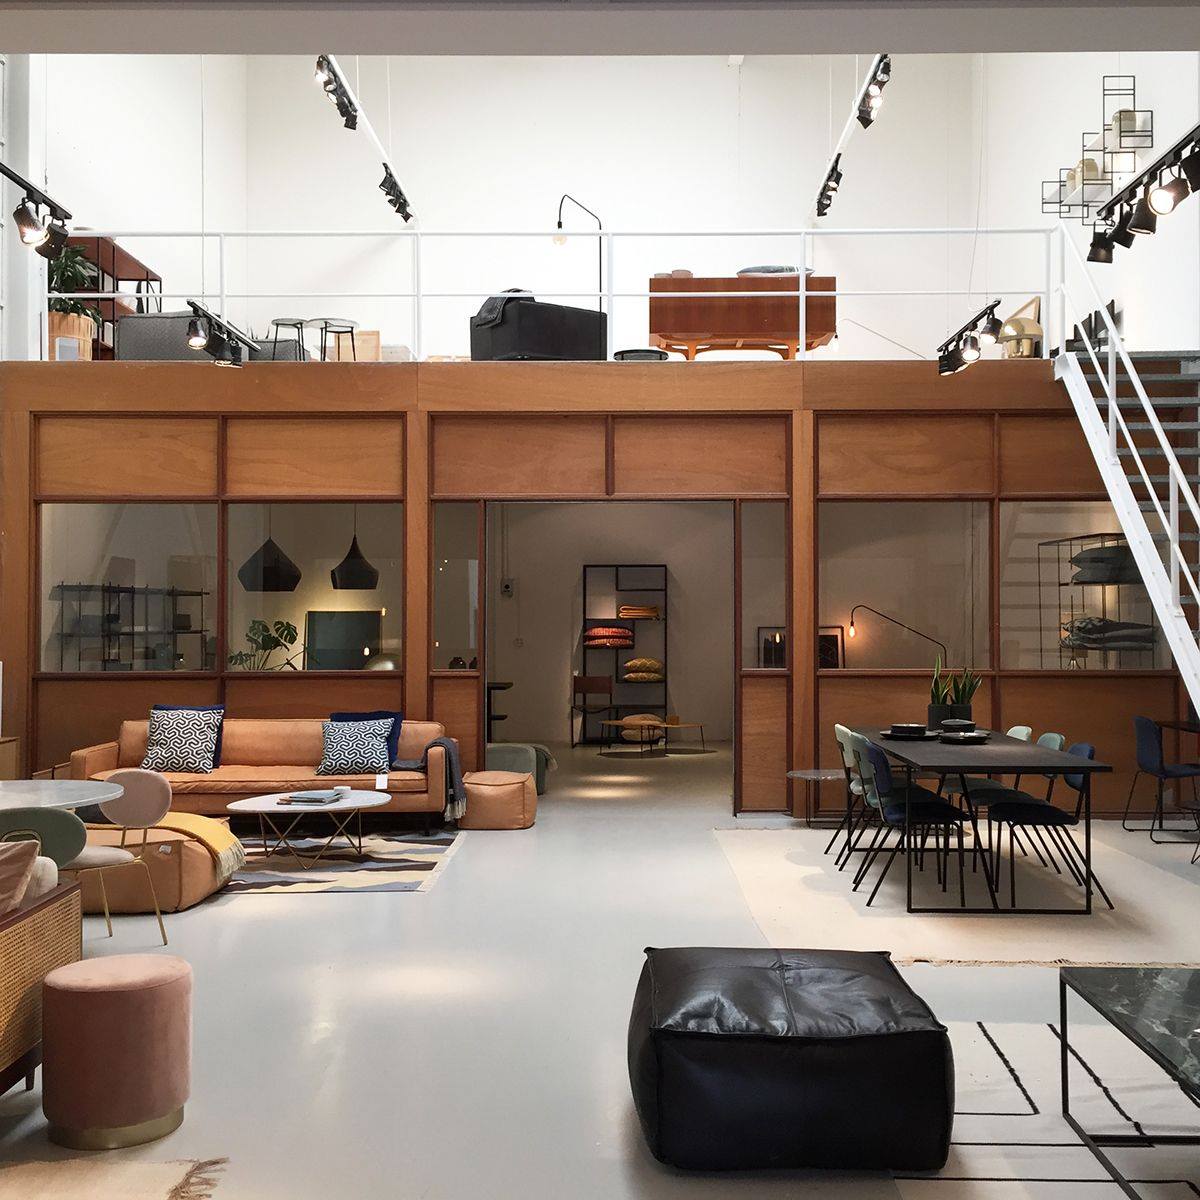 Showroom van Furnified in Amsterdam gevuld met meubels.ALT